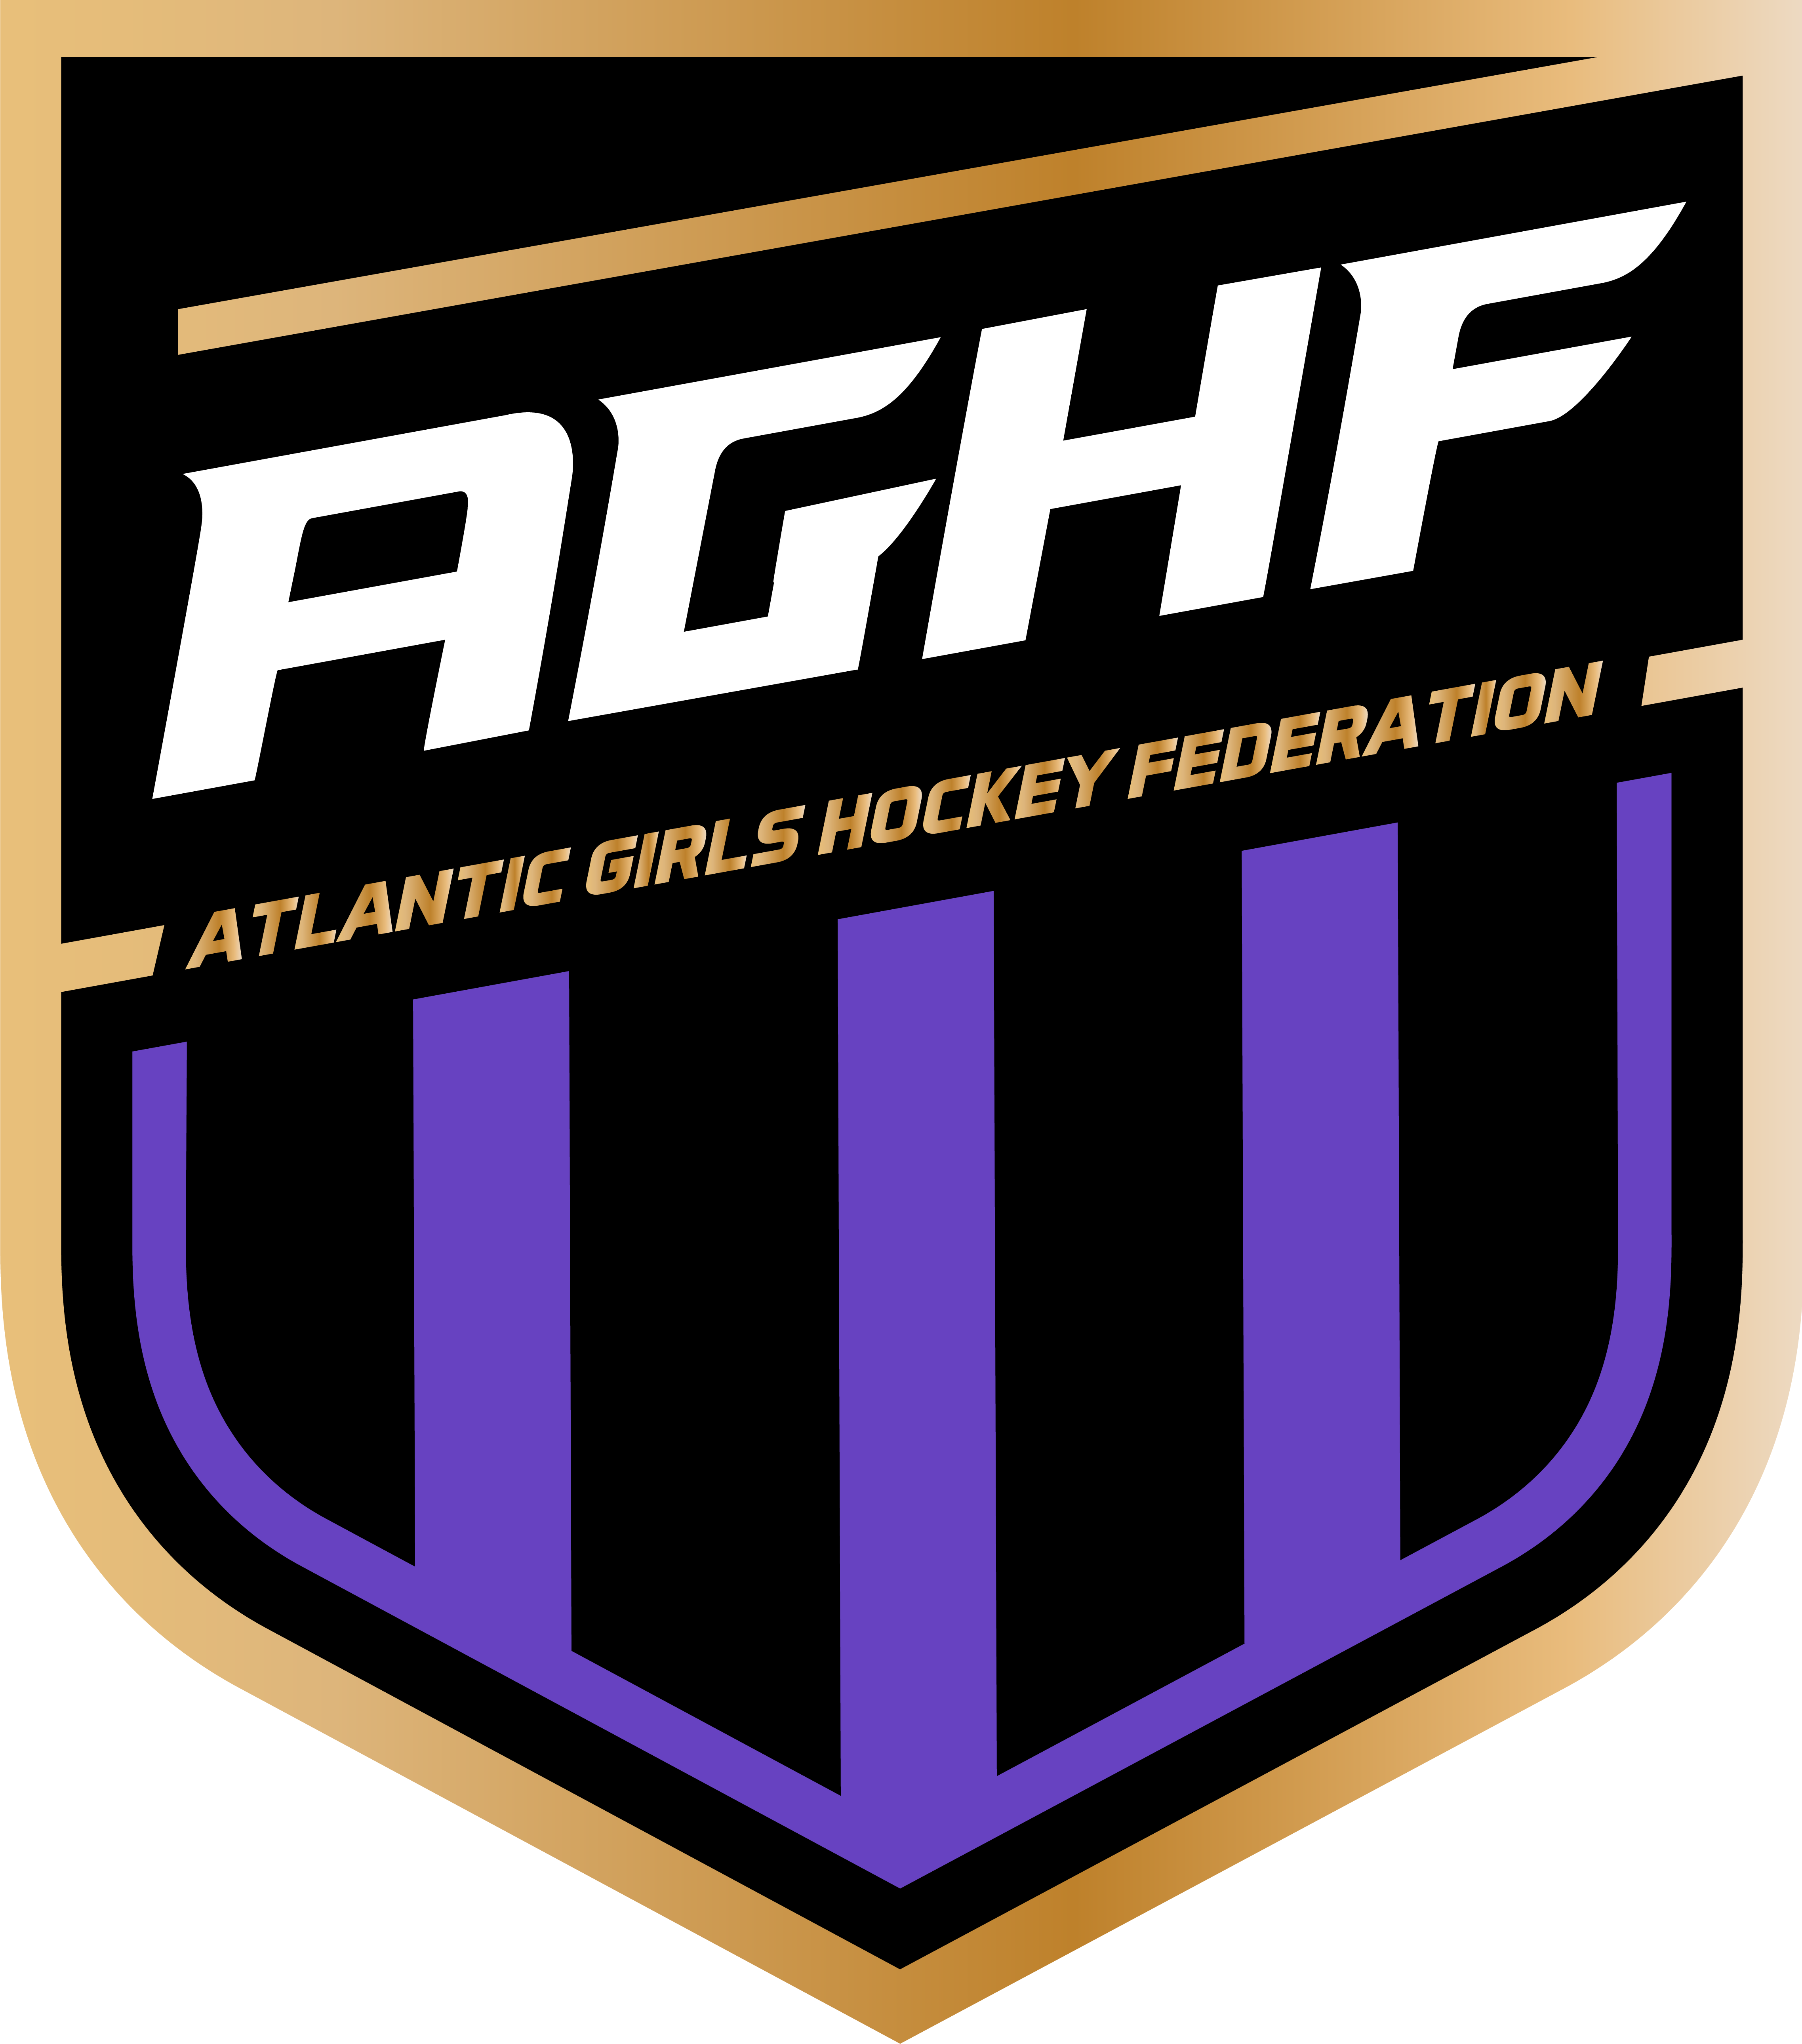 Atlantic Girls Hockey Federation